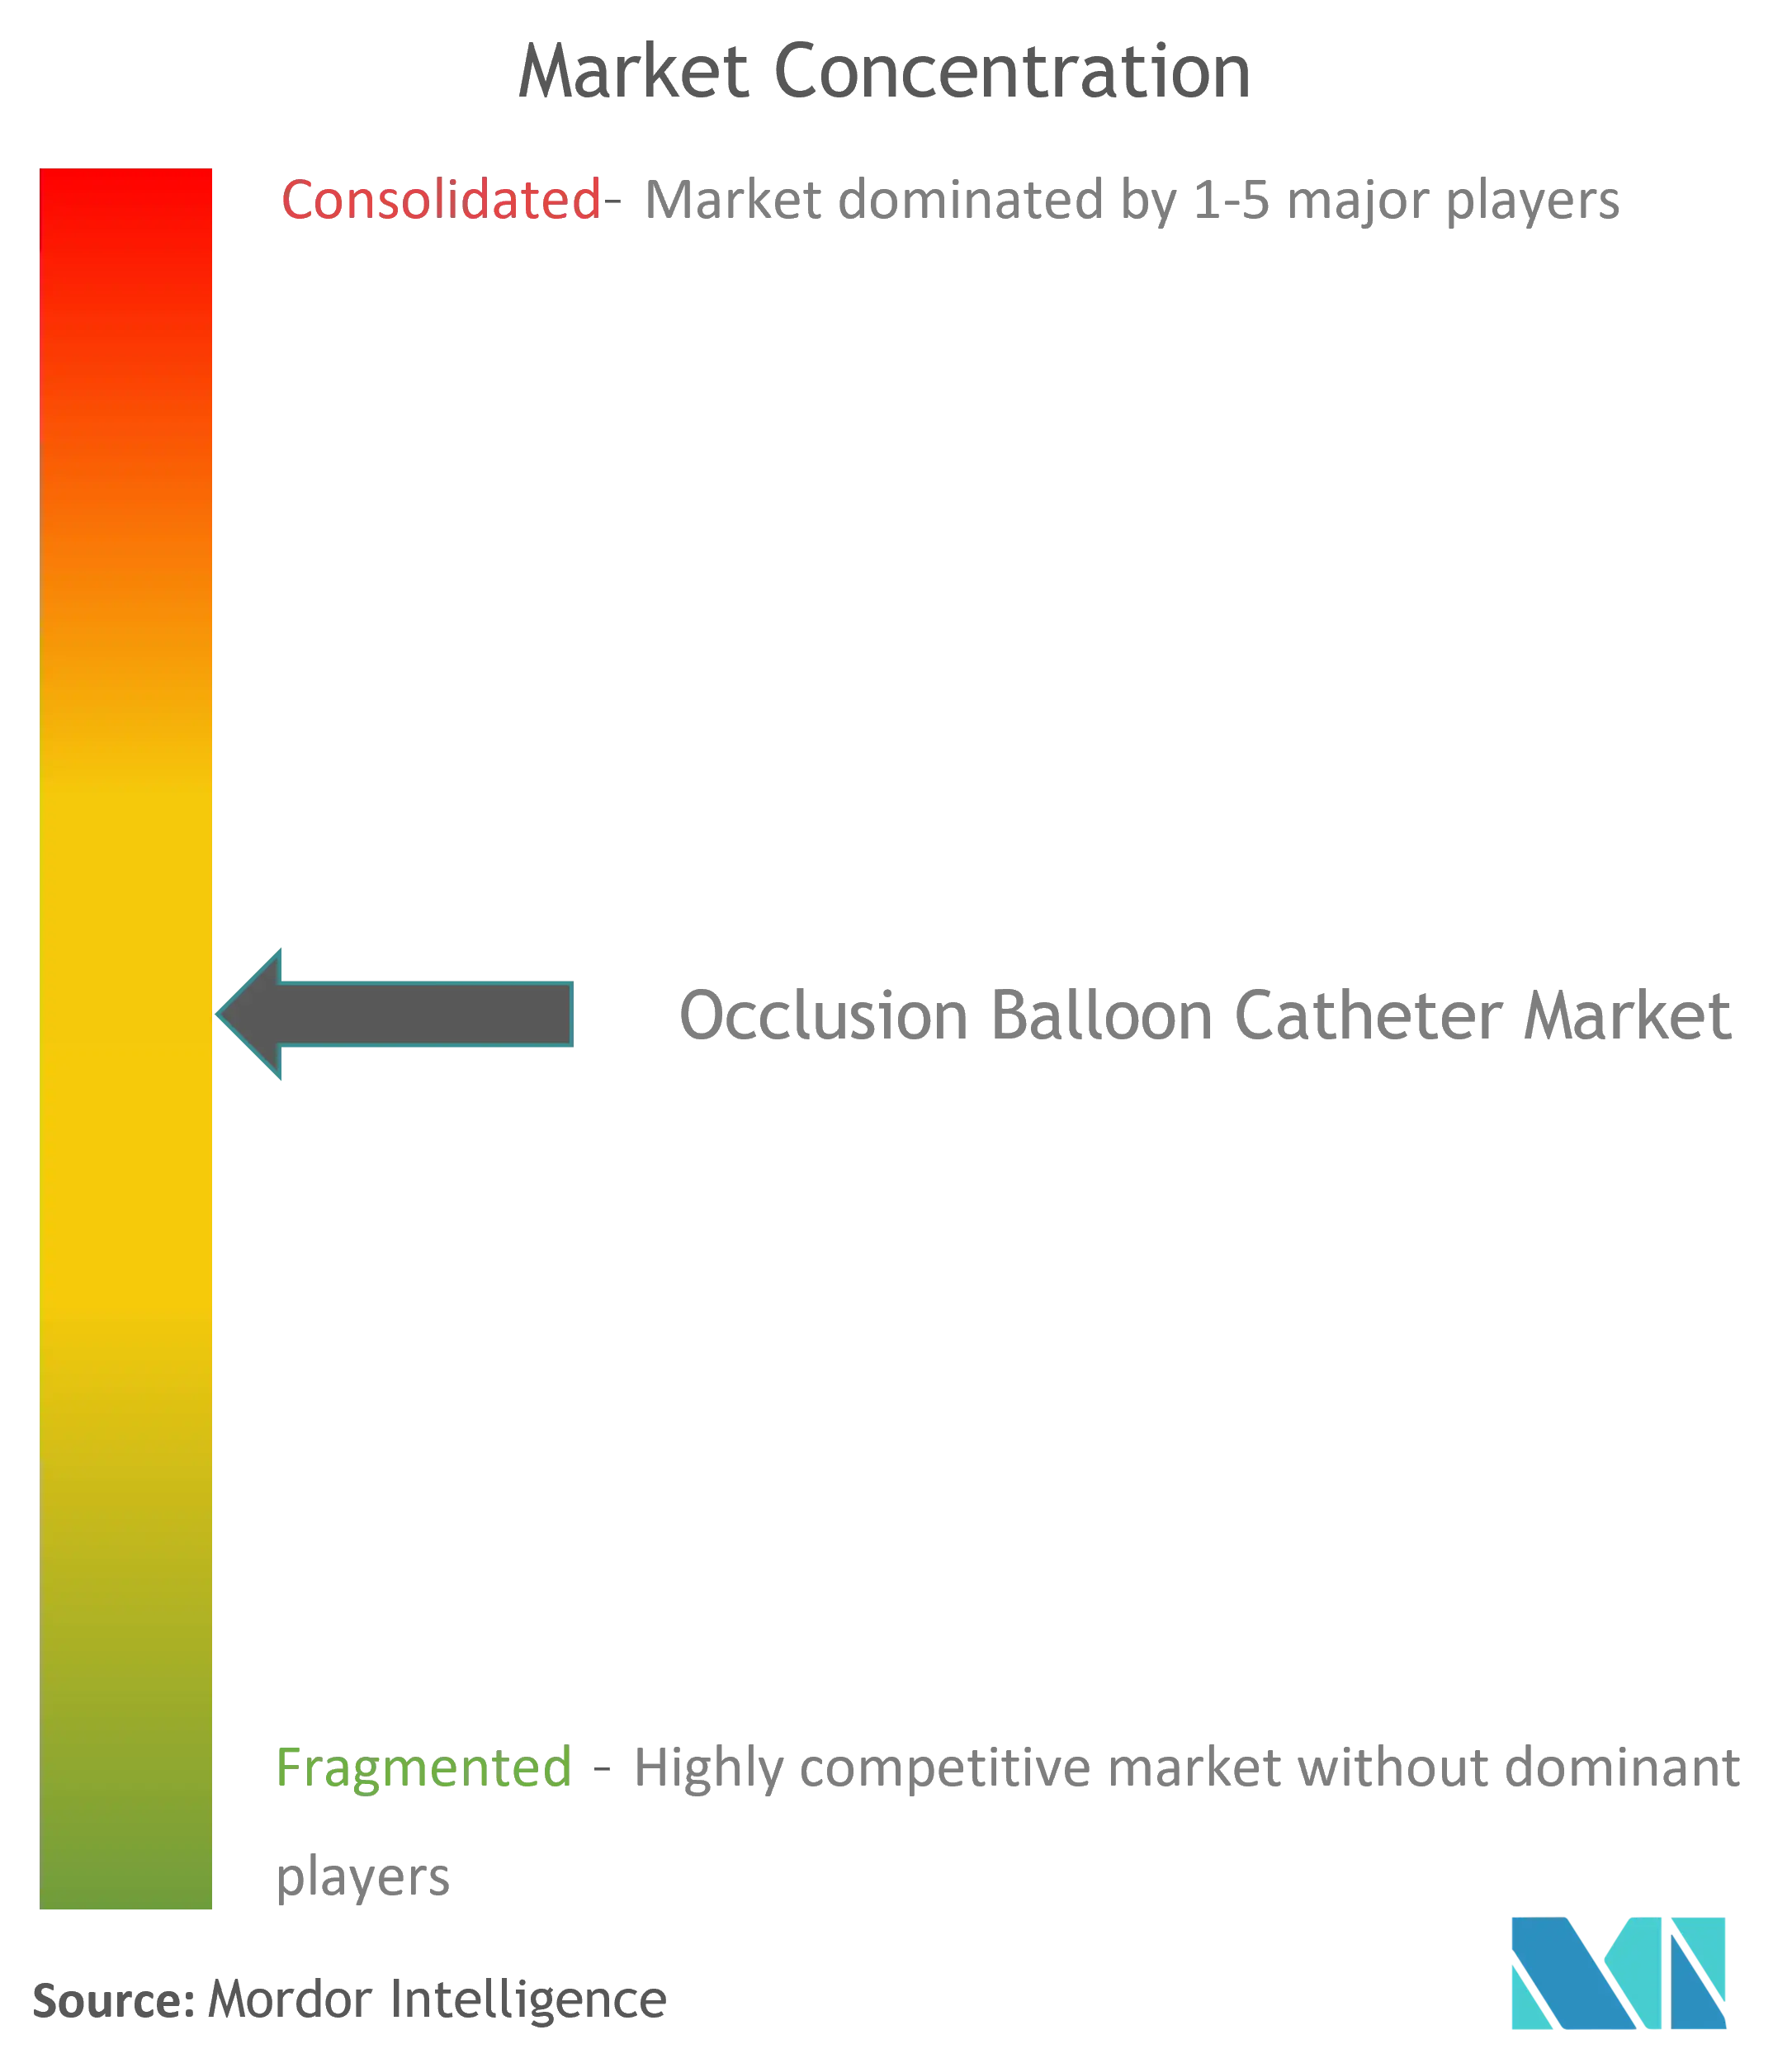 Marktkonzentration für Okklusionsballonkatheter